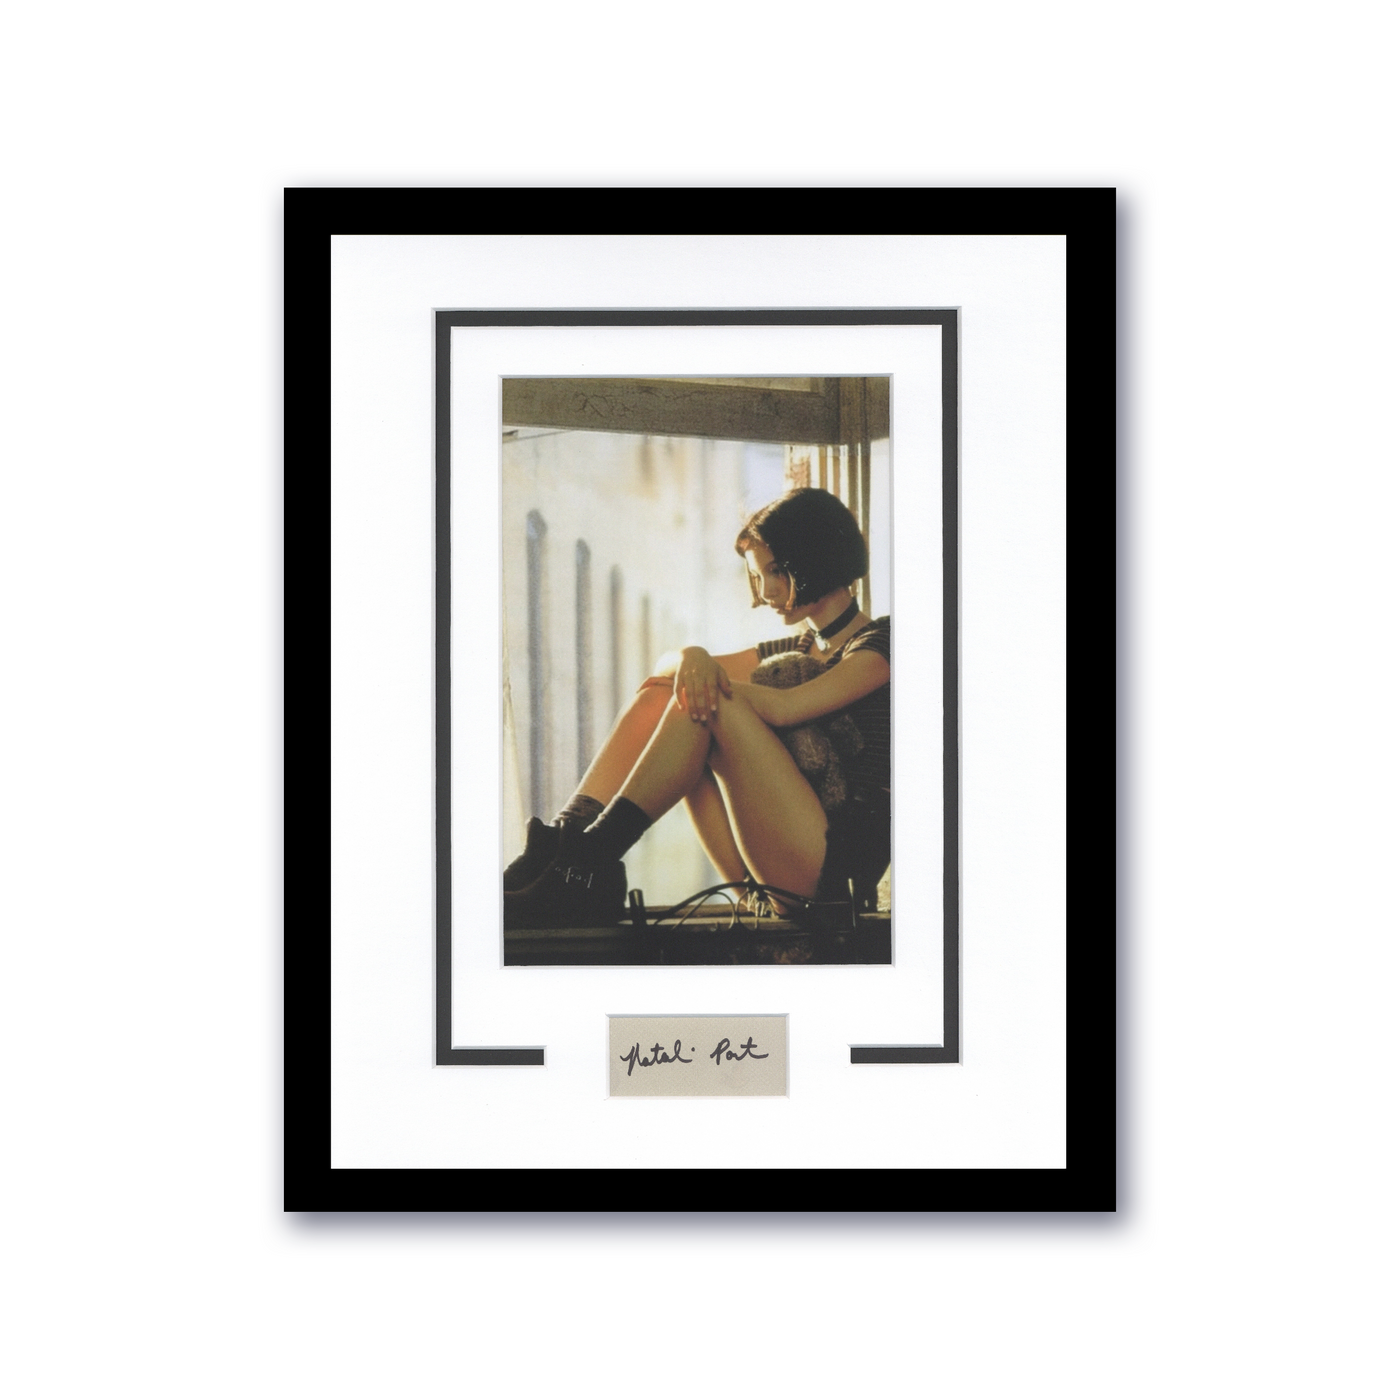 Leon The Professional Natalie Portman Autograph 11x14 Framed Poster Photo ACOA